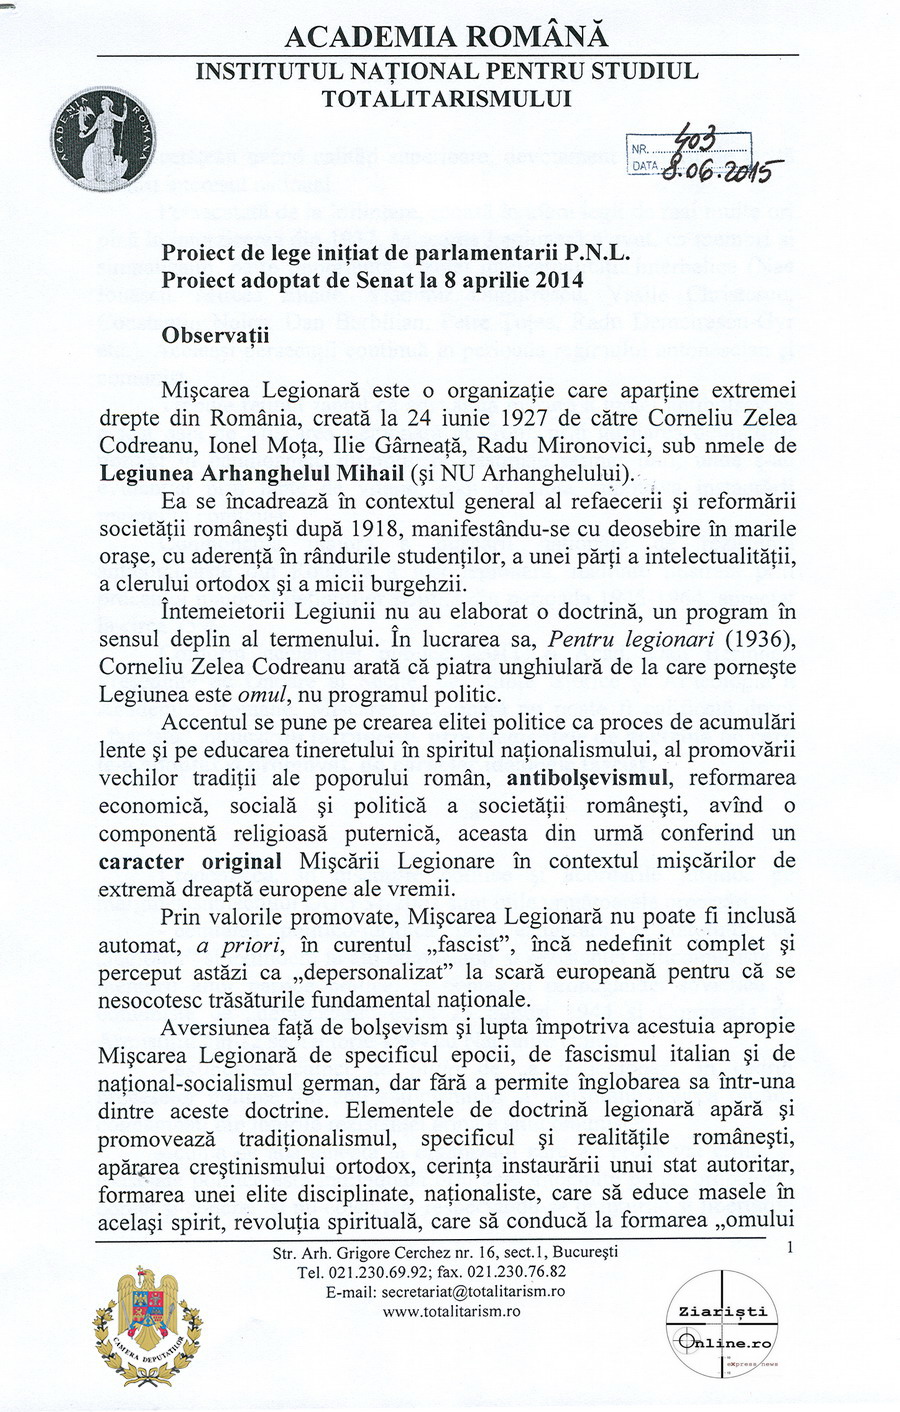 Academia Romana INST despre Miscarea Legionara 01 Iunie 2015 - Camera Deputatilor - Ziaristi Online